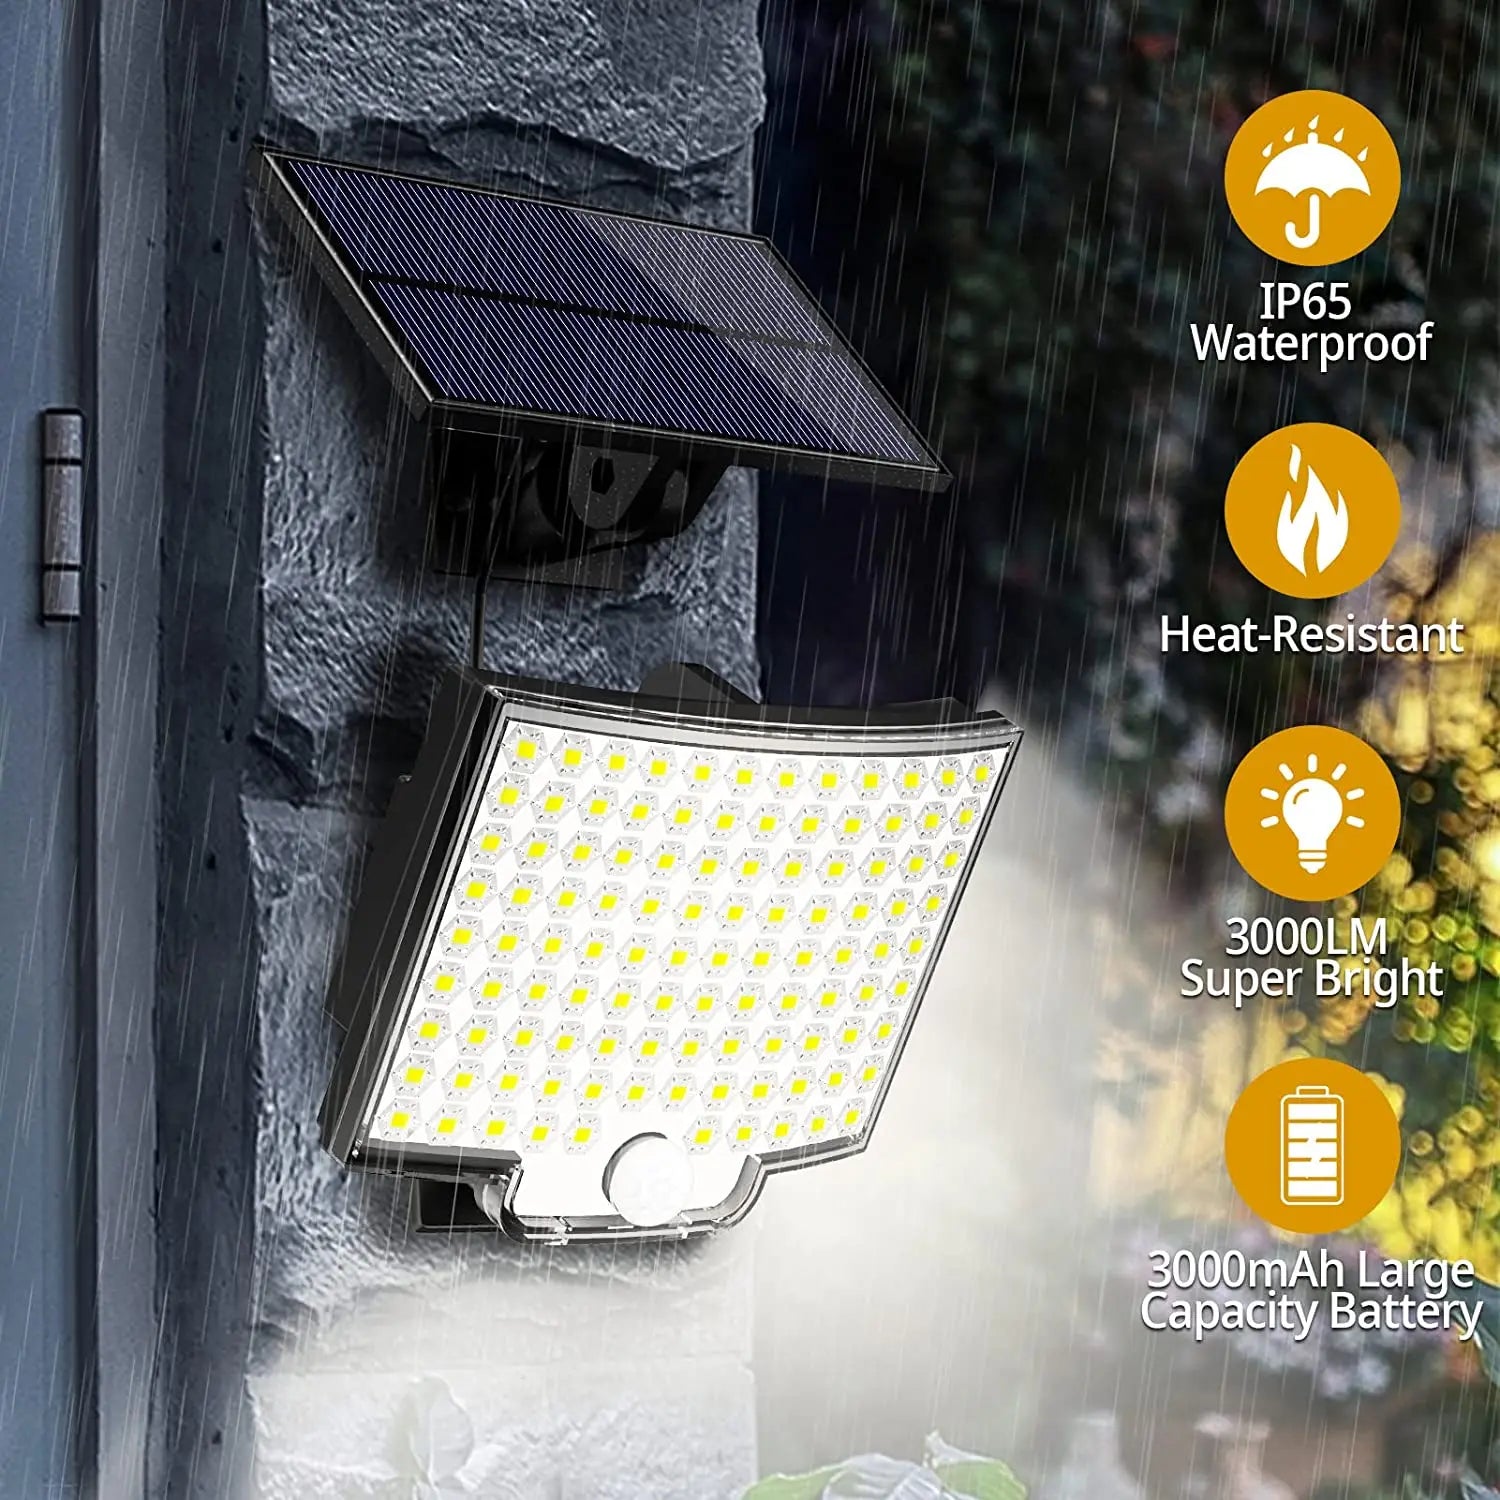 Solar Light, Rugged solar lamp with waterproof design, high-brightness LEDs, and long-lasting 3000mAh battery.